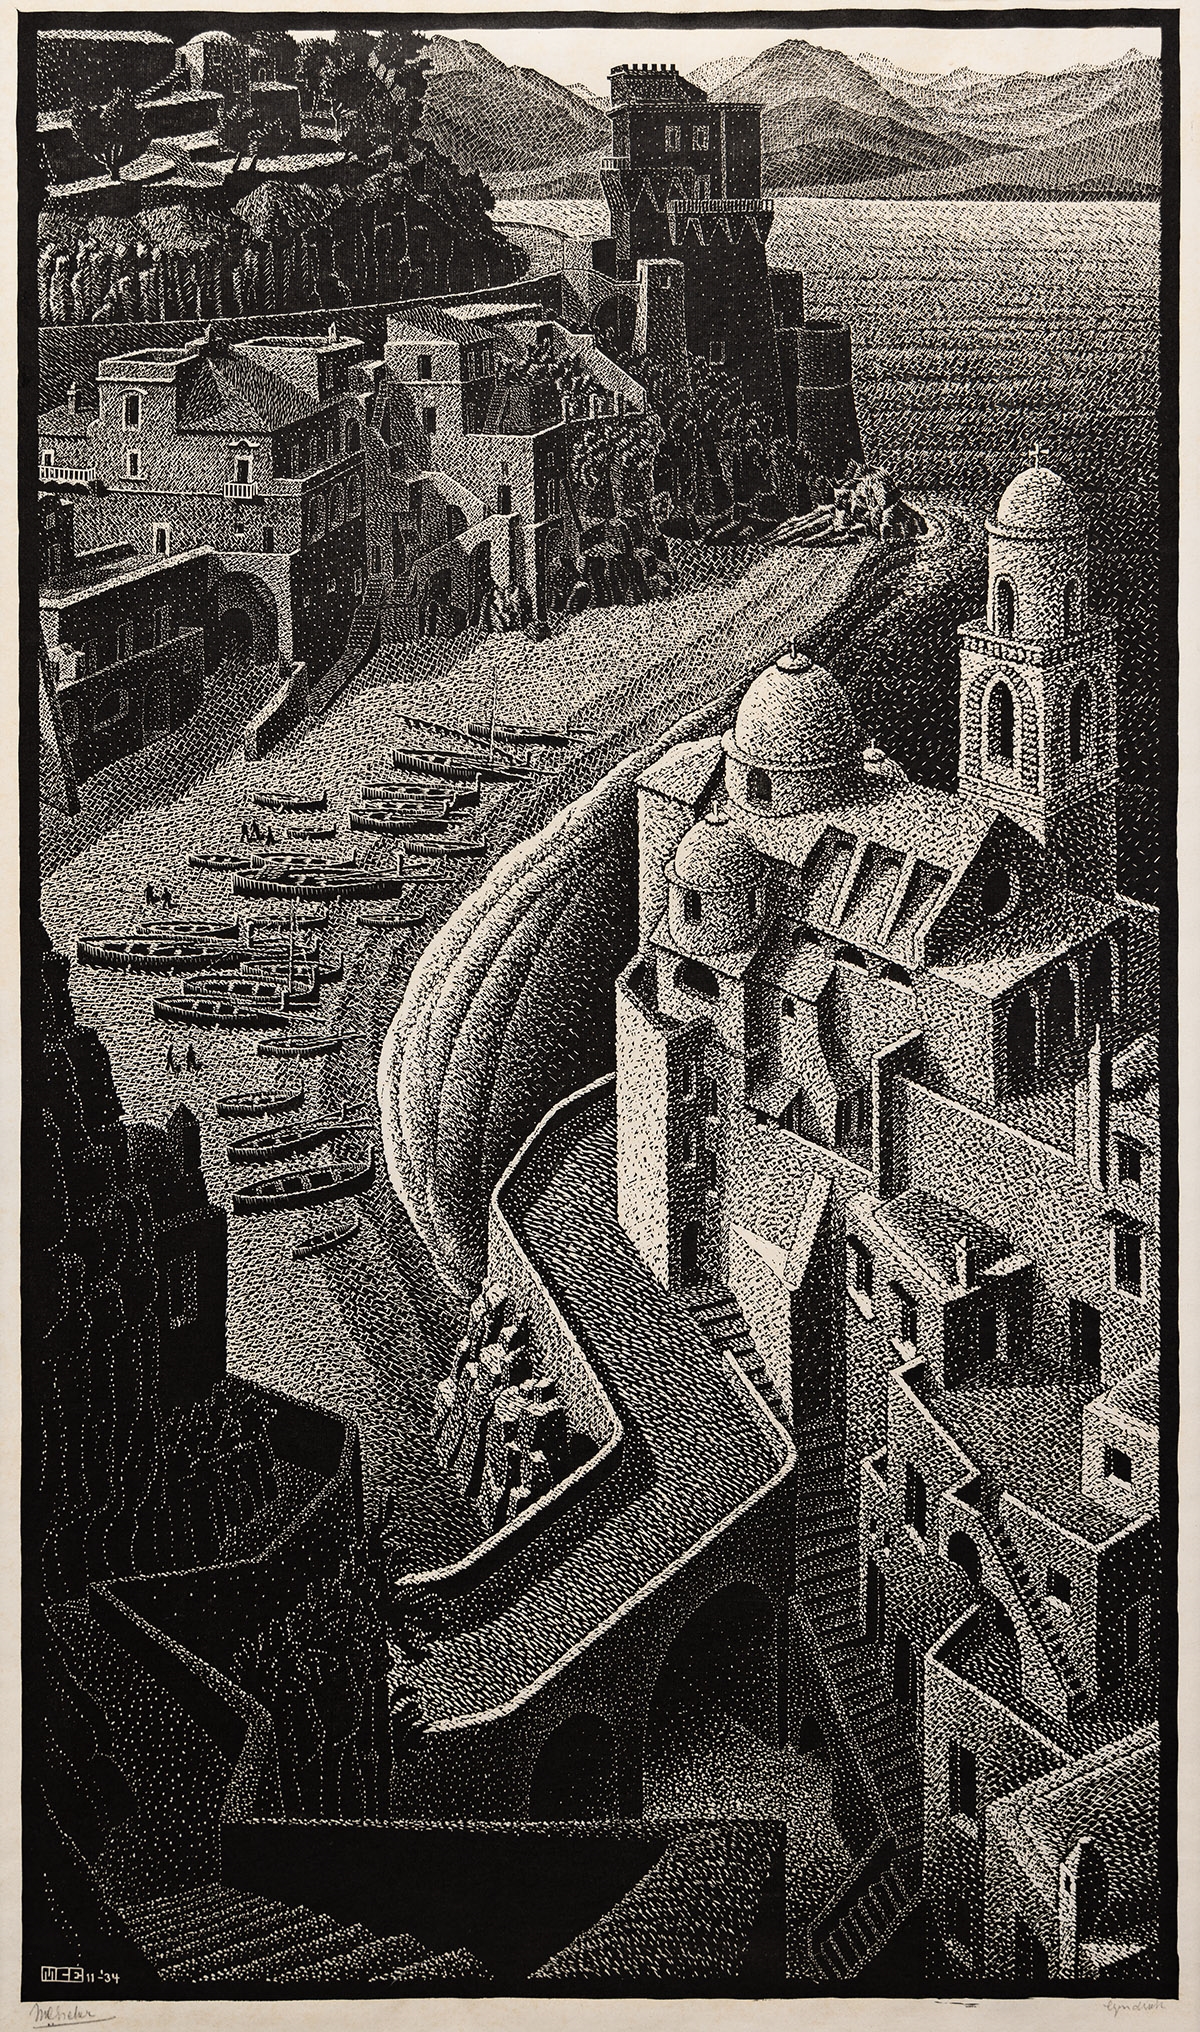 Circle Limit lV” large poster – M.C. Escher – The Official Website